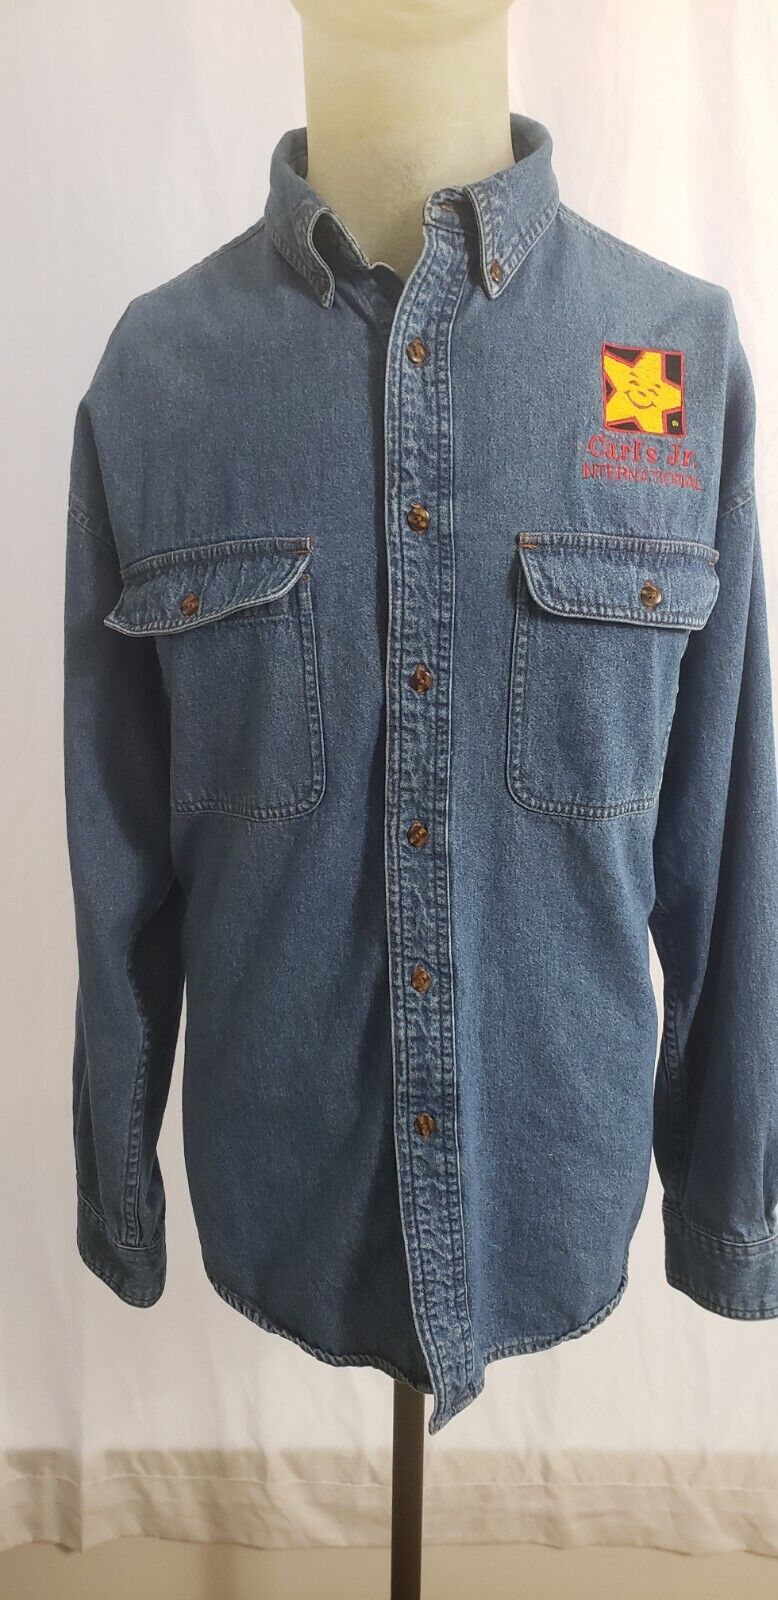 Carl\'s Jr. International Men\'s Denim Button Down Embroidered Shirt, Size X-Large